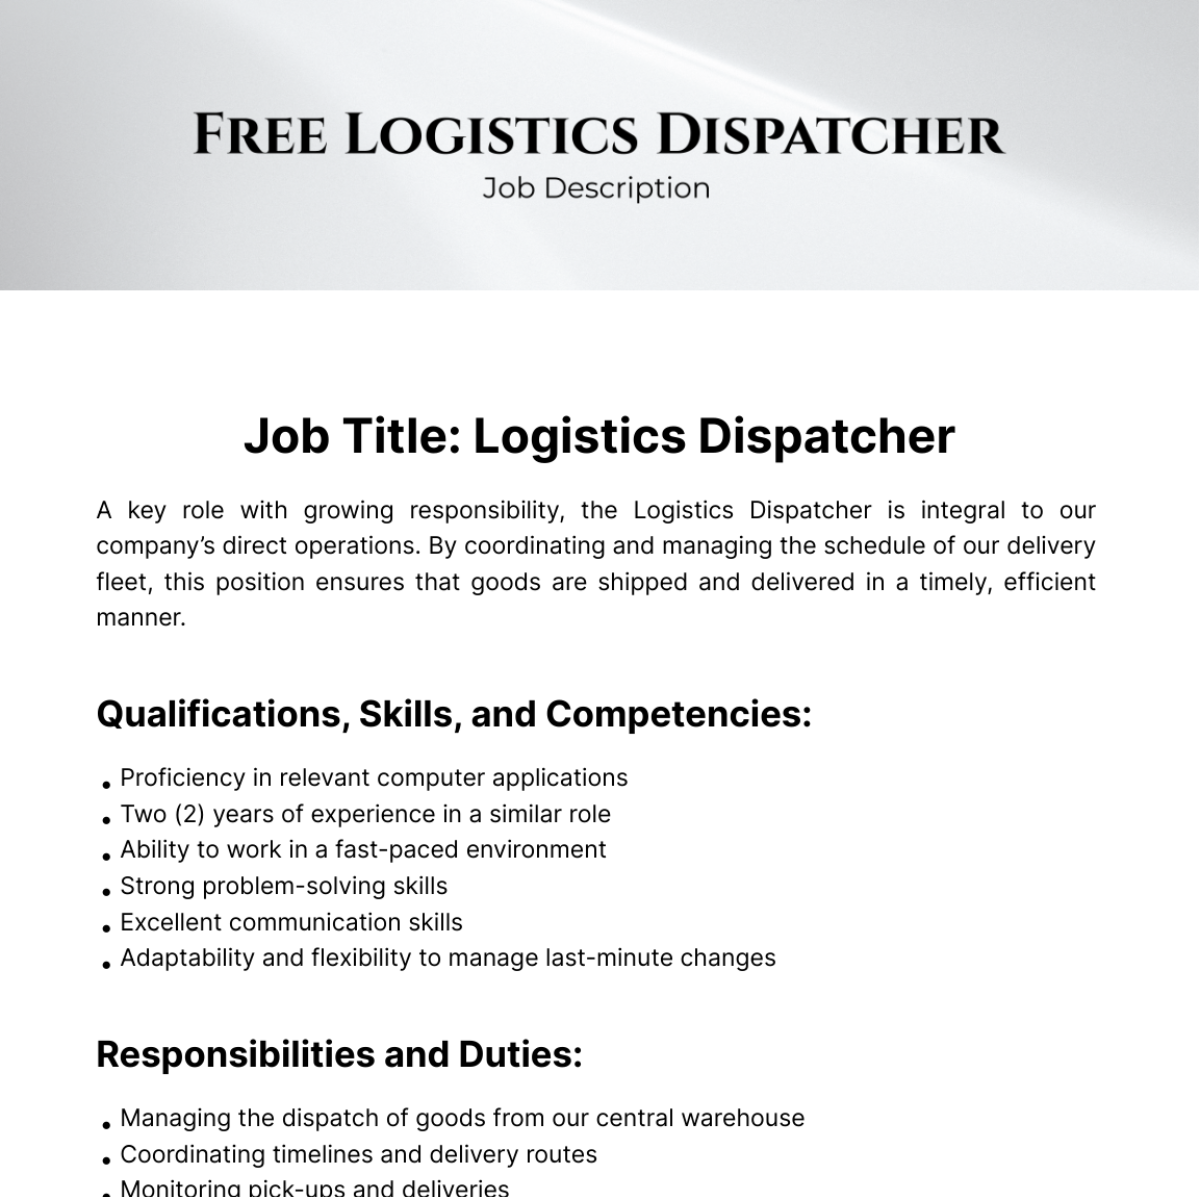 Free Logistics Dispatcher Job Description Template